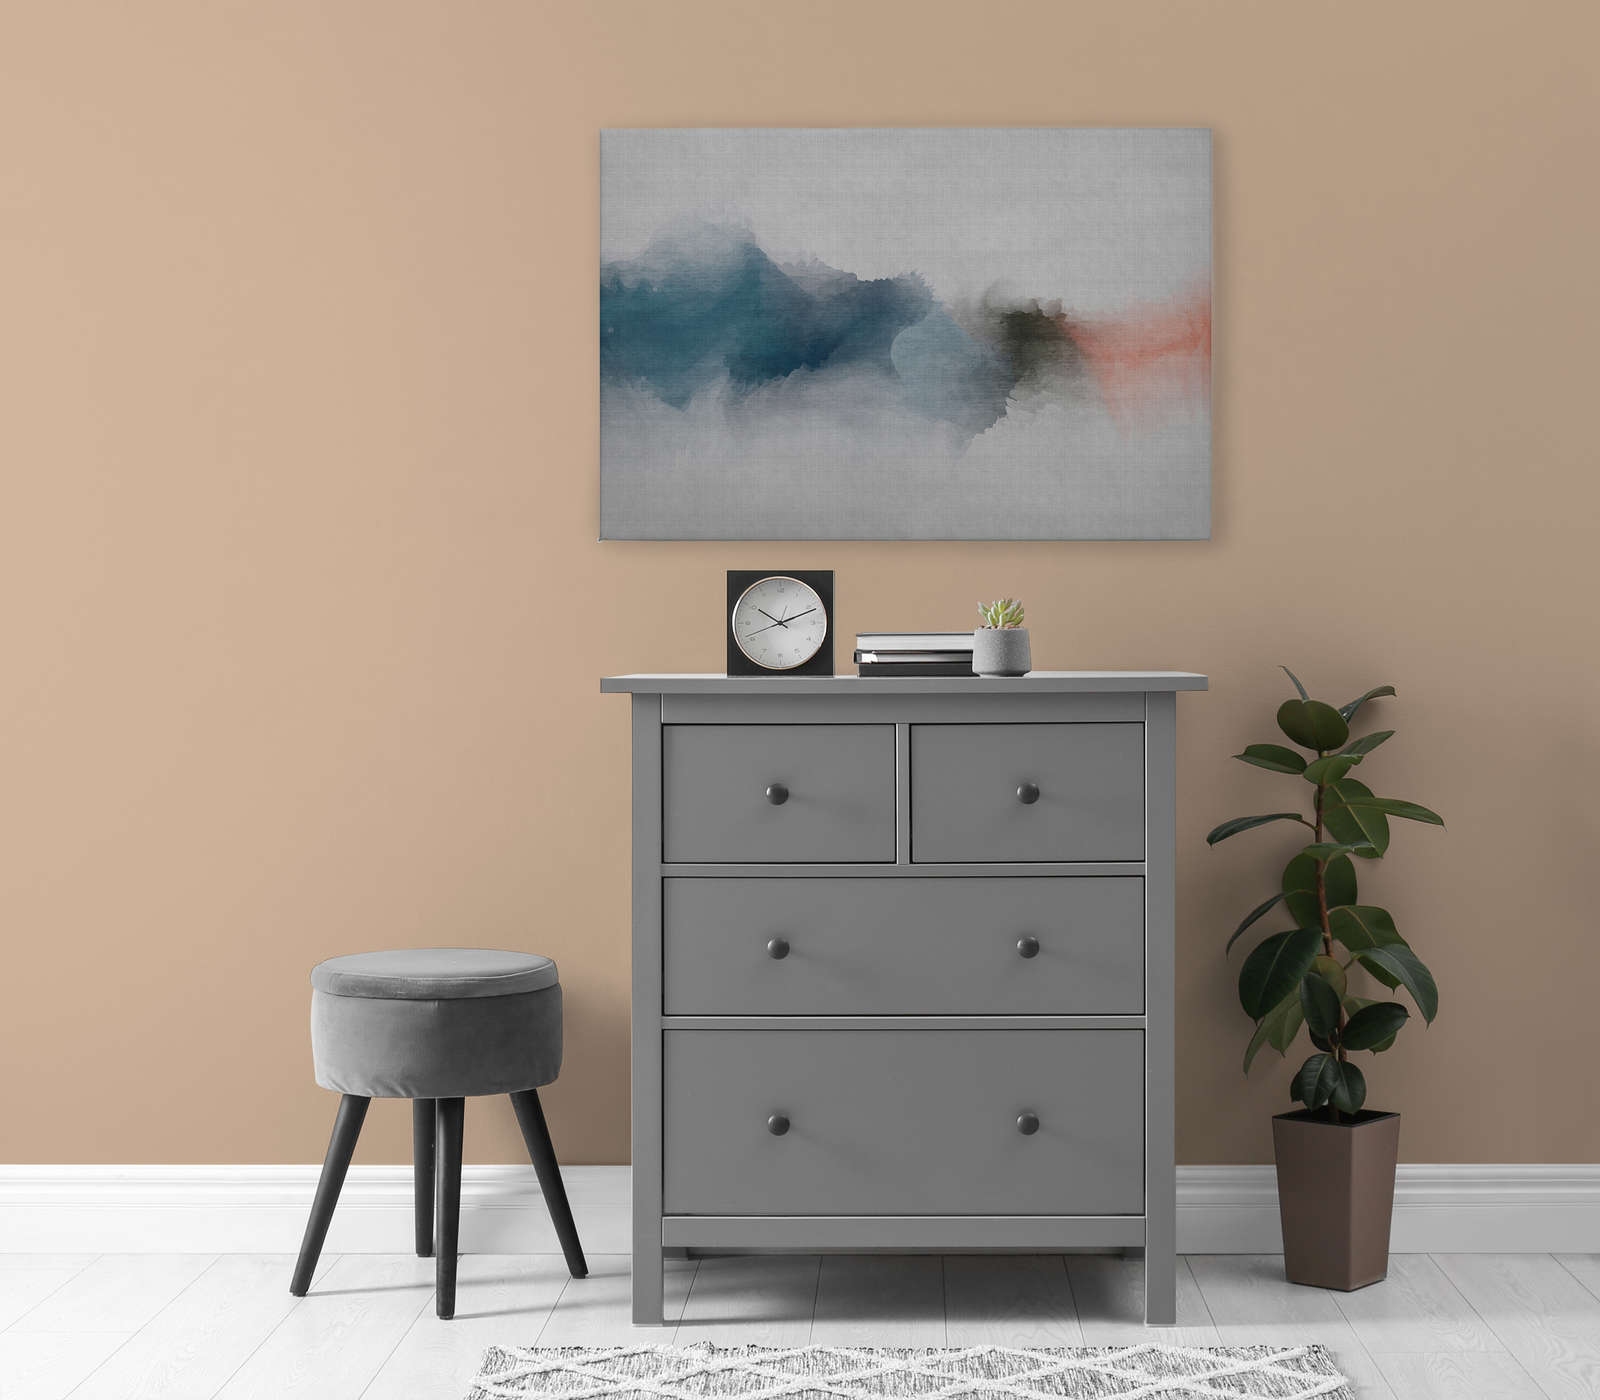             Daydream 1 - Pintura minimalista en lienzo estilo acuarela - Textura de lino natural - 0,90 m x 0,60 m
        